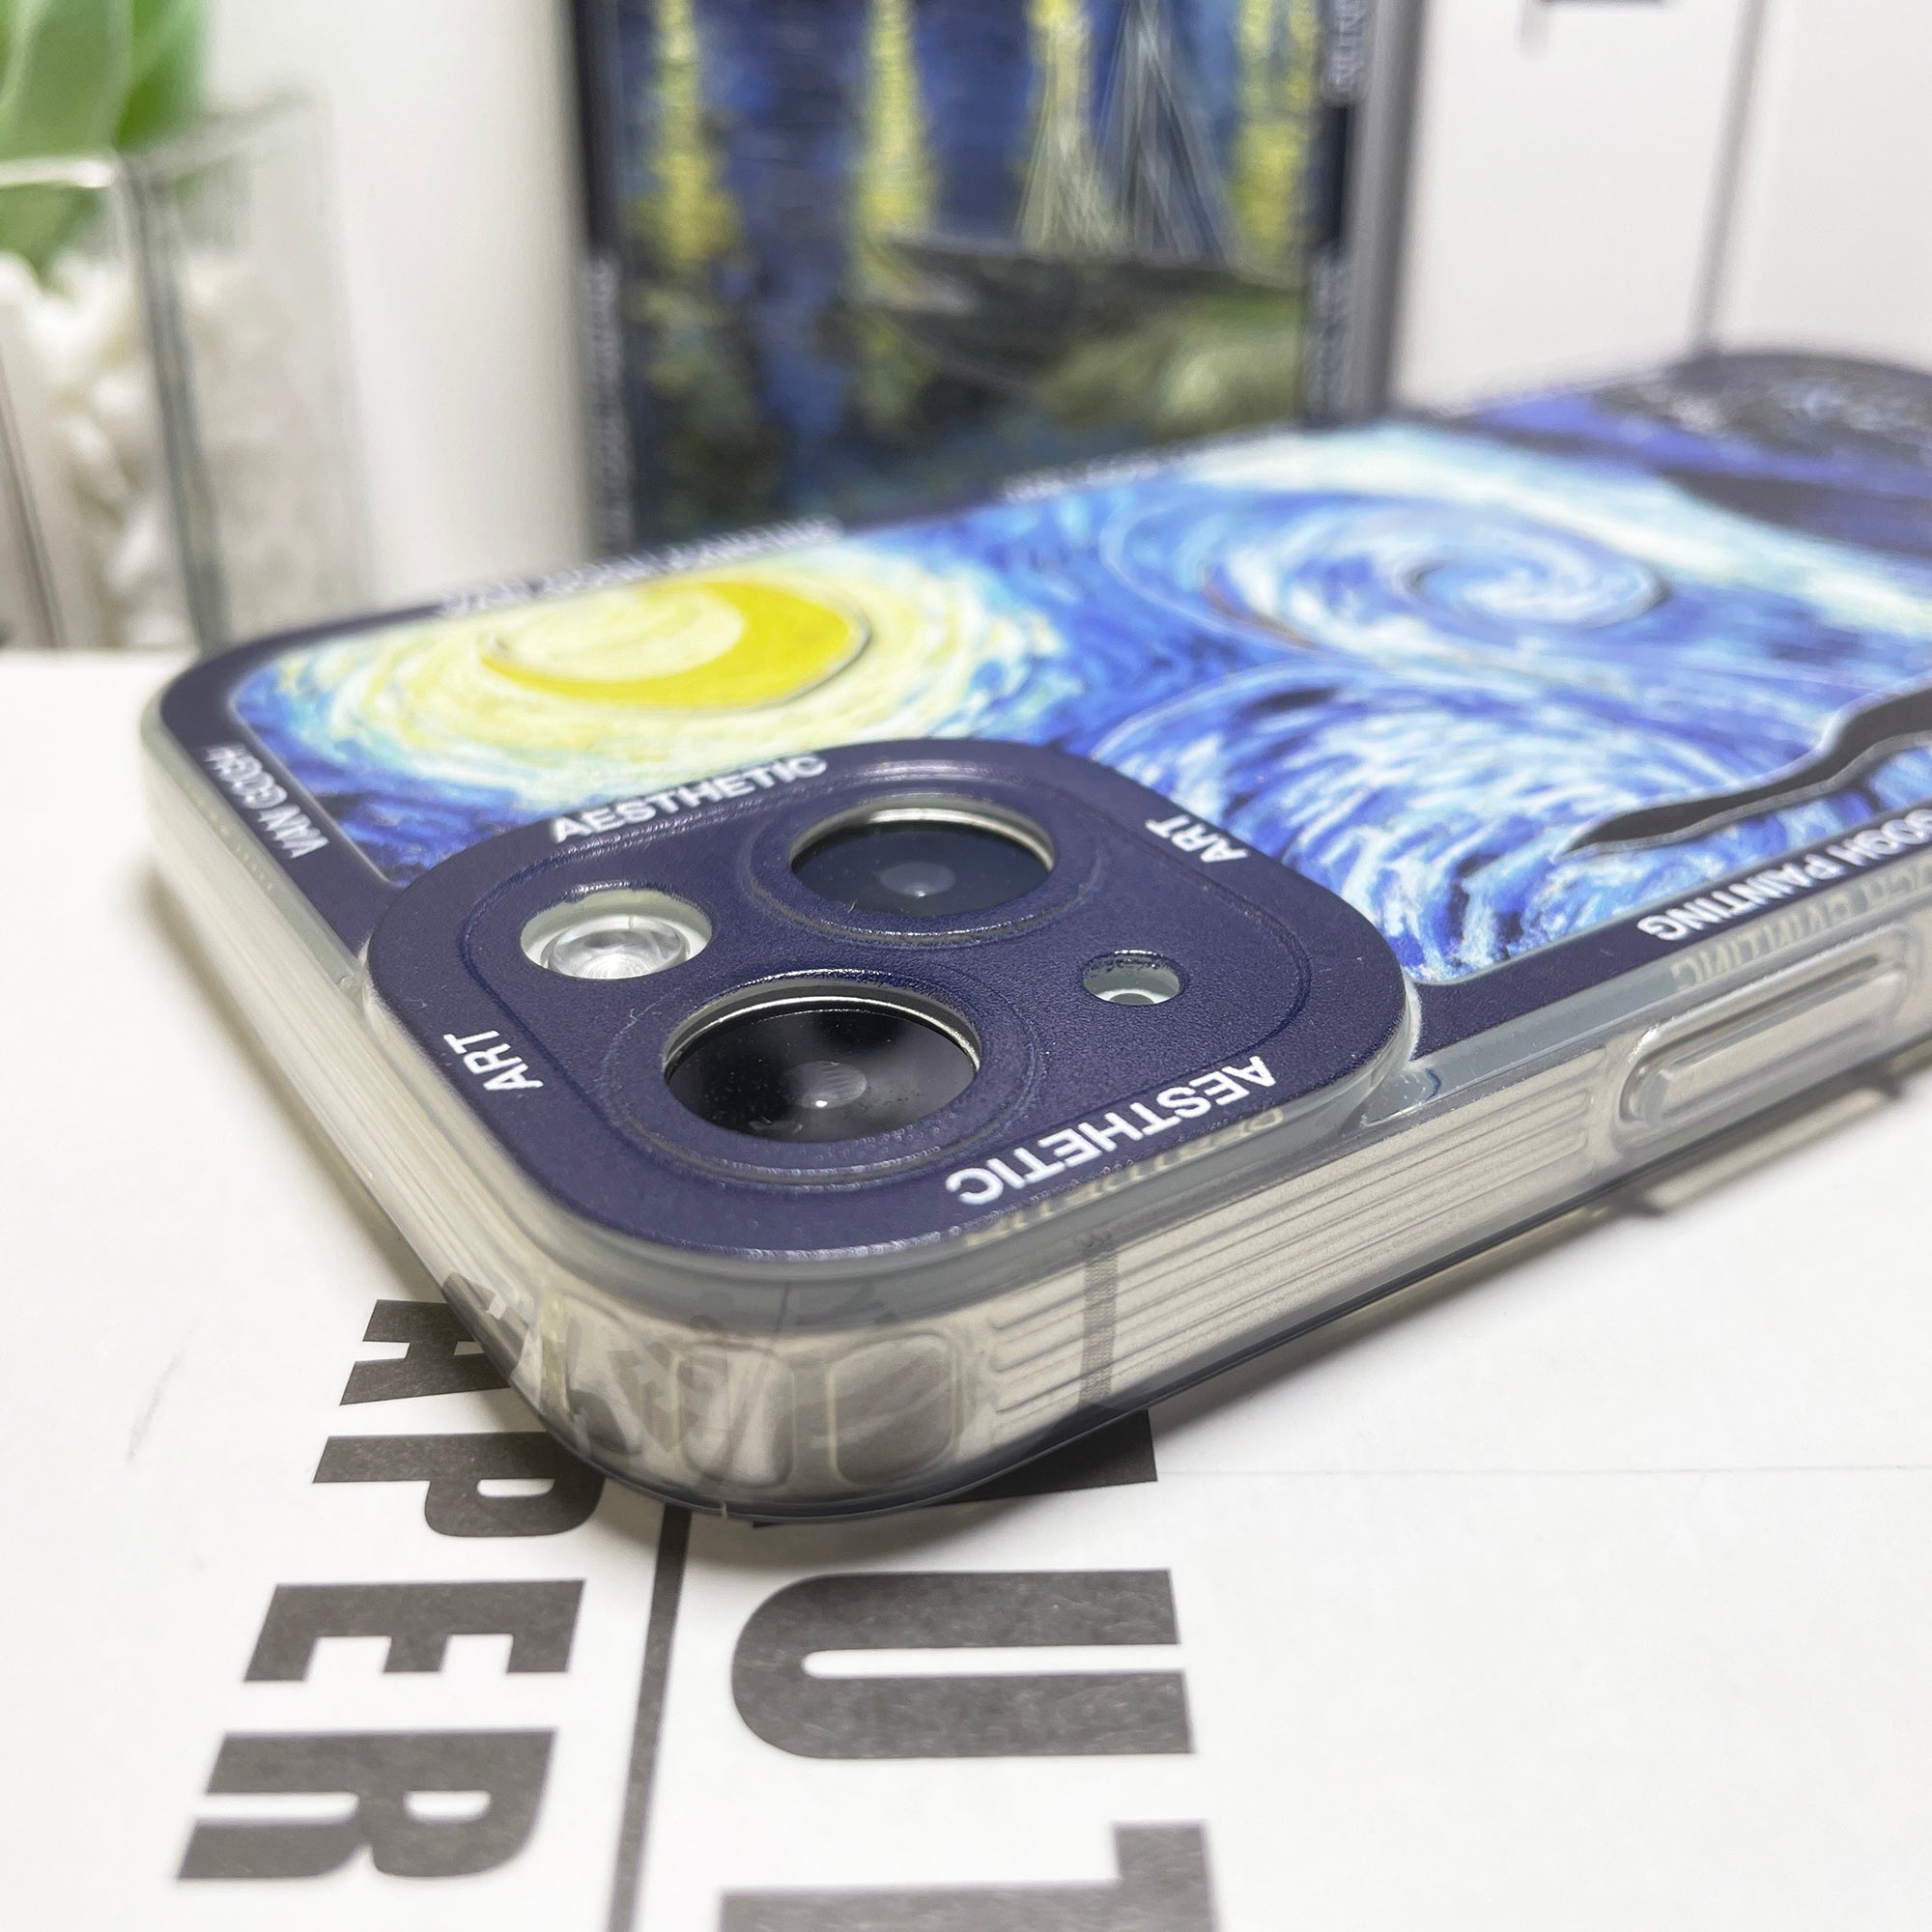 Van Gogh Art Aesthetic Silicone iPhone Case